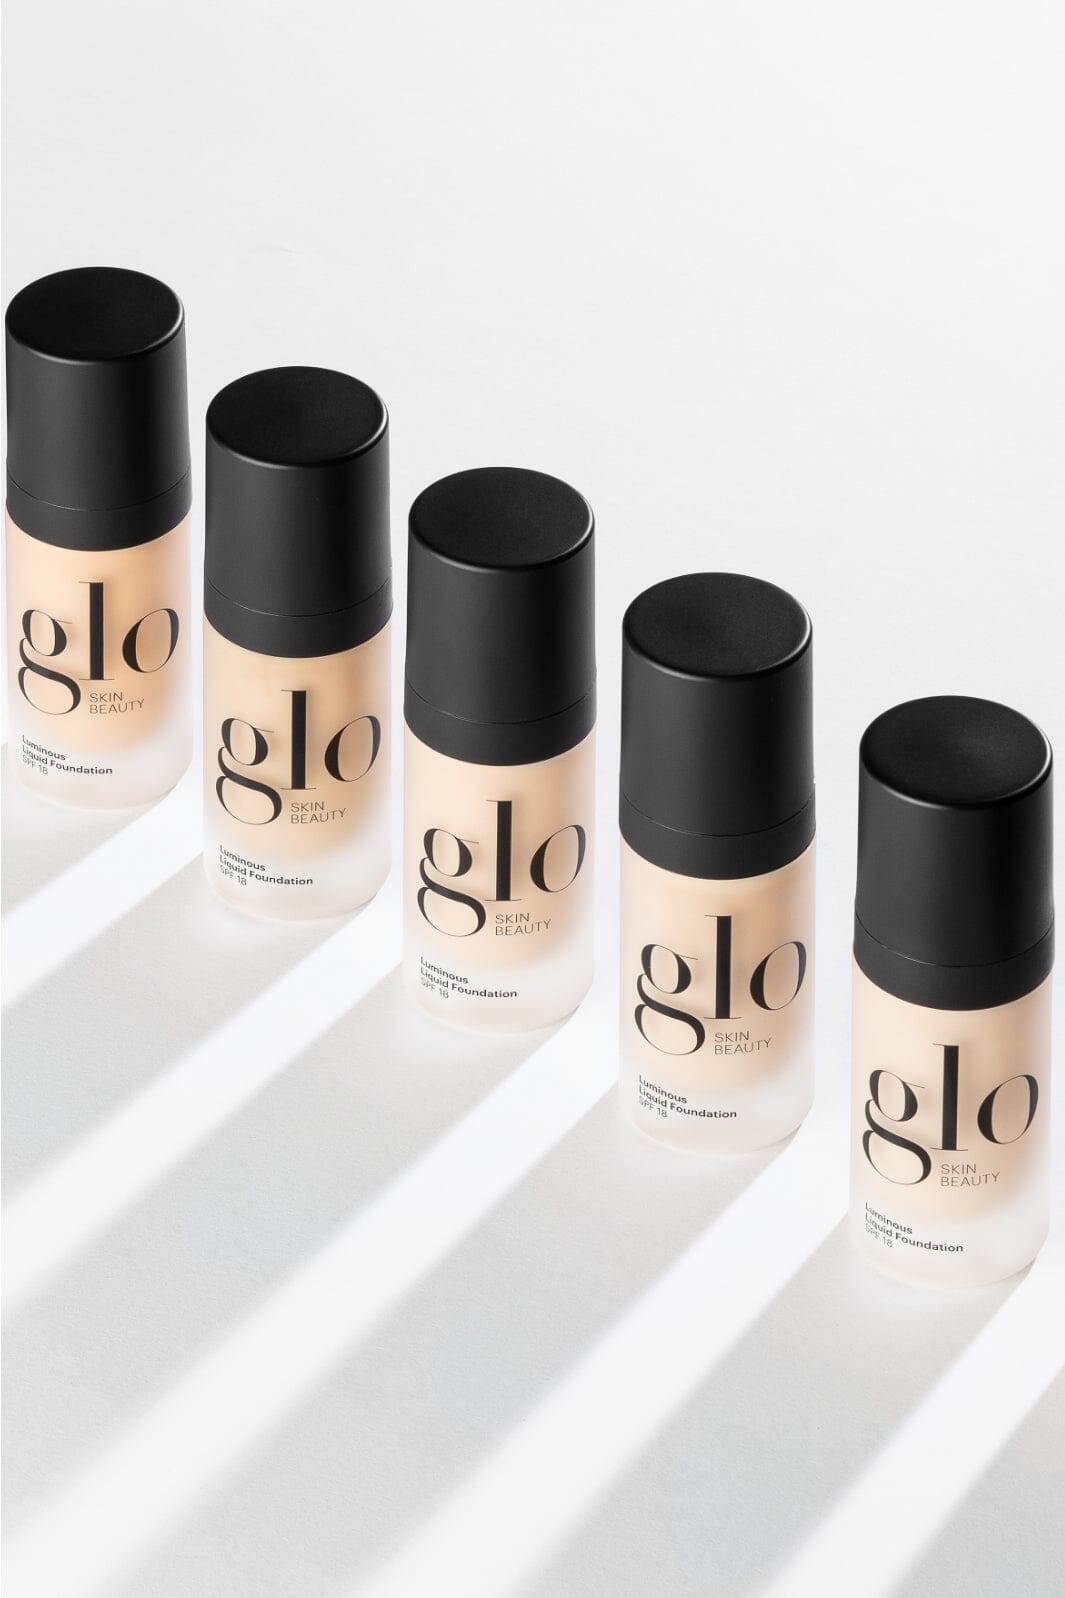 Glo Skin Beauty - Glo Luminous Liquid Foundation SPF 18 - Porcelain, 30 ml Foundation 